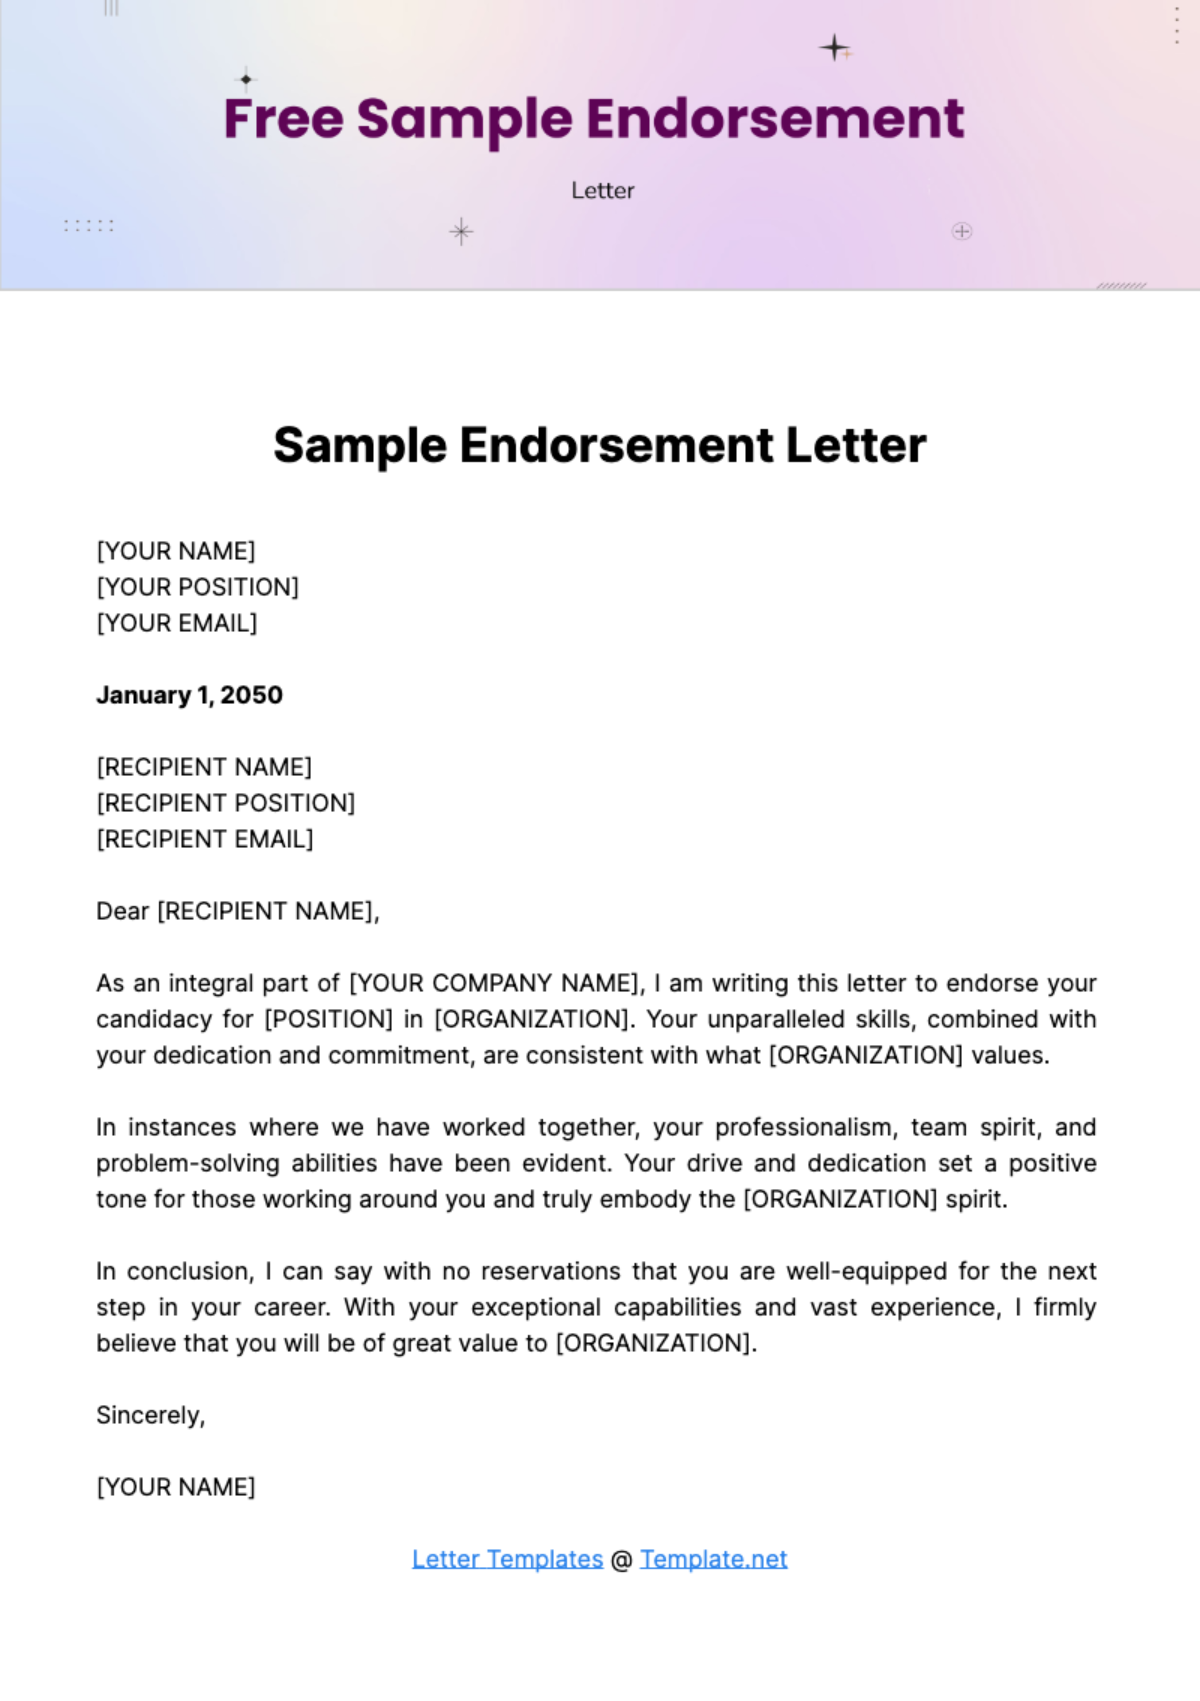 Free Sample Endorsement Letter Template